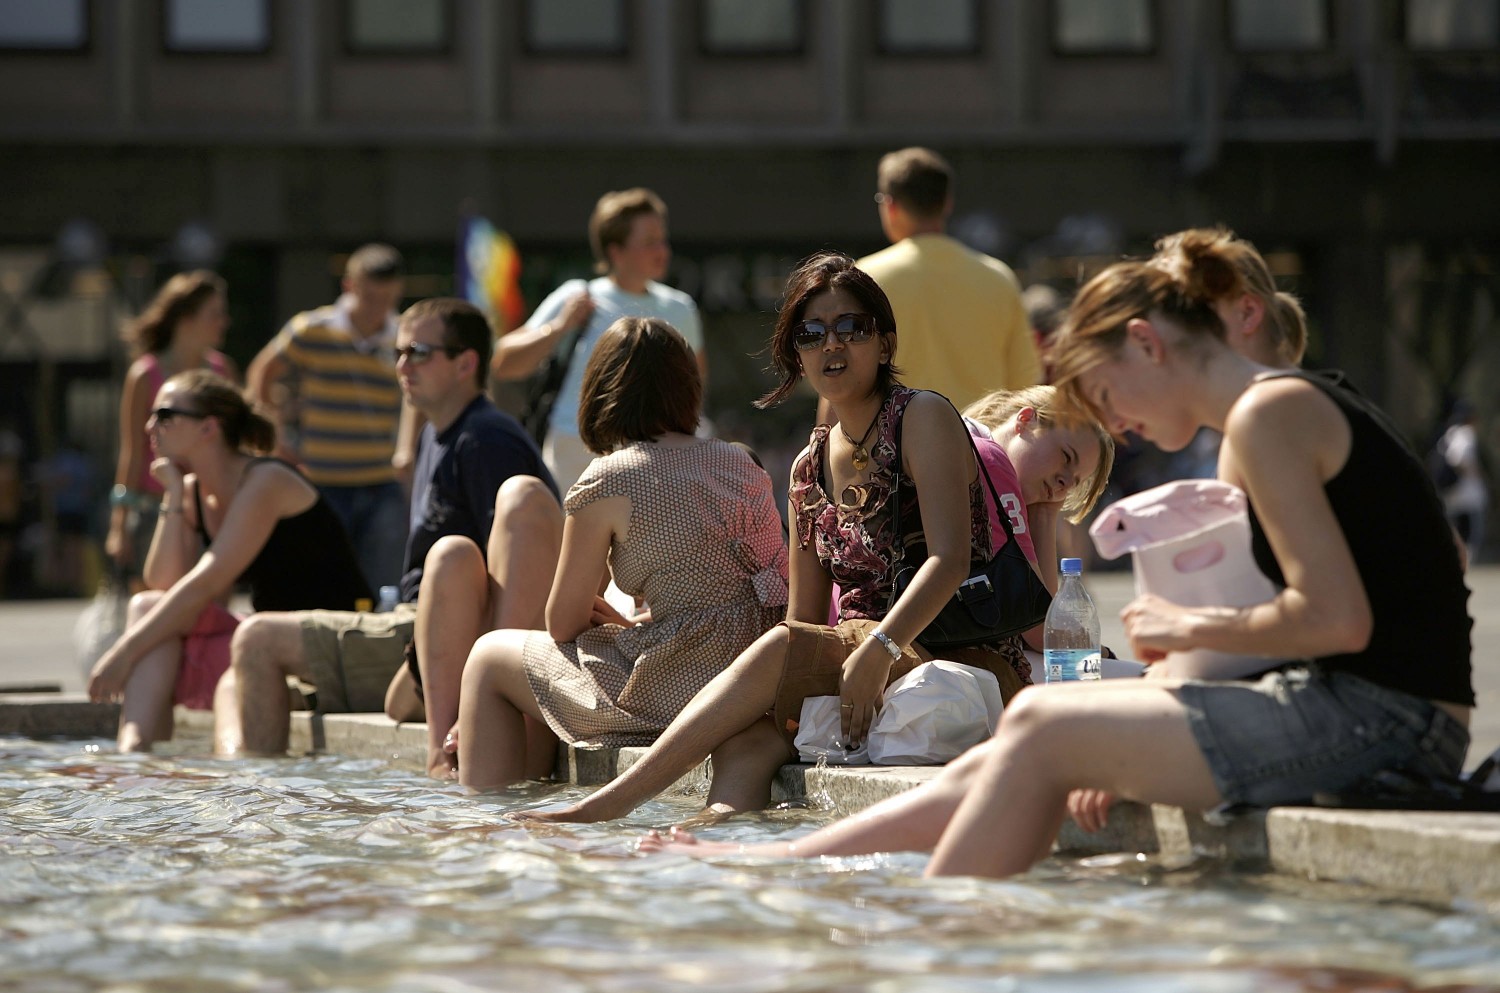 Europe Basks in Continuing Summer Heatwave